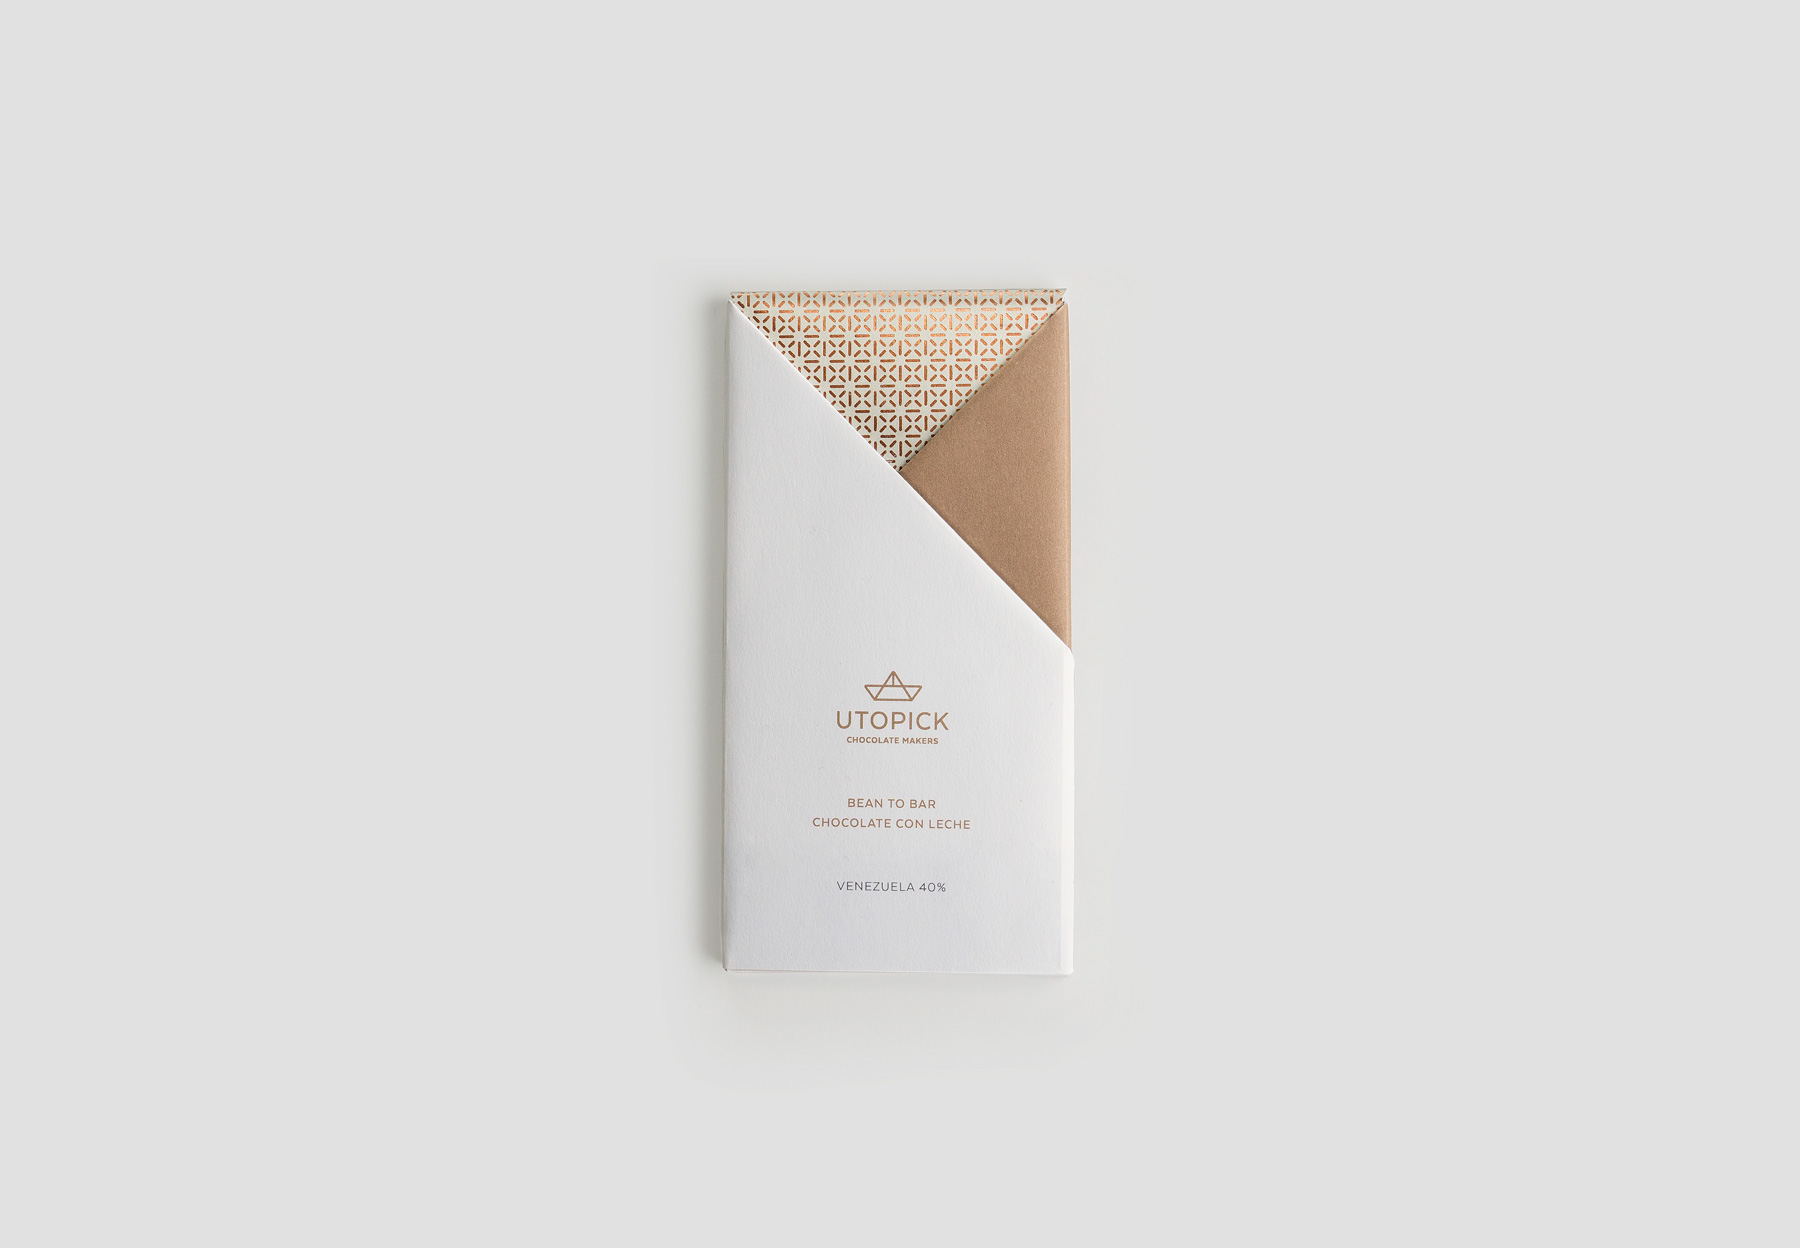 lavernia-cienfuegos-utopick-chocolates-corporate-identity-packaging-chocolate-bar-04